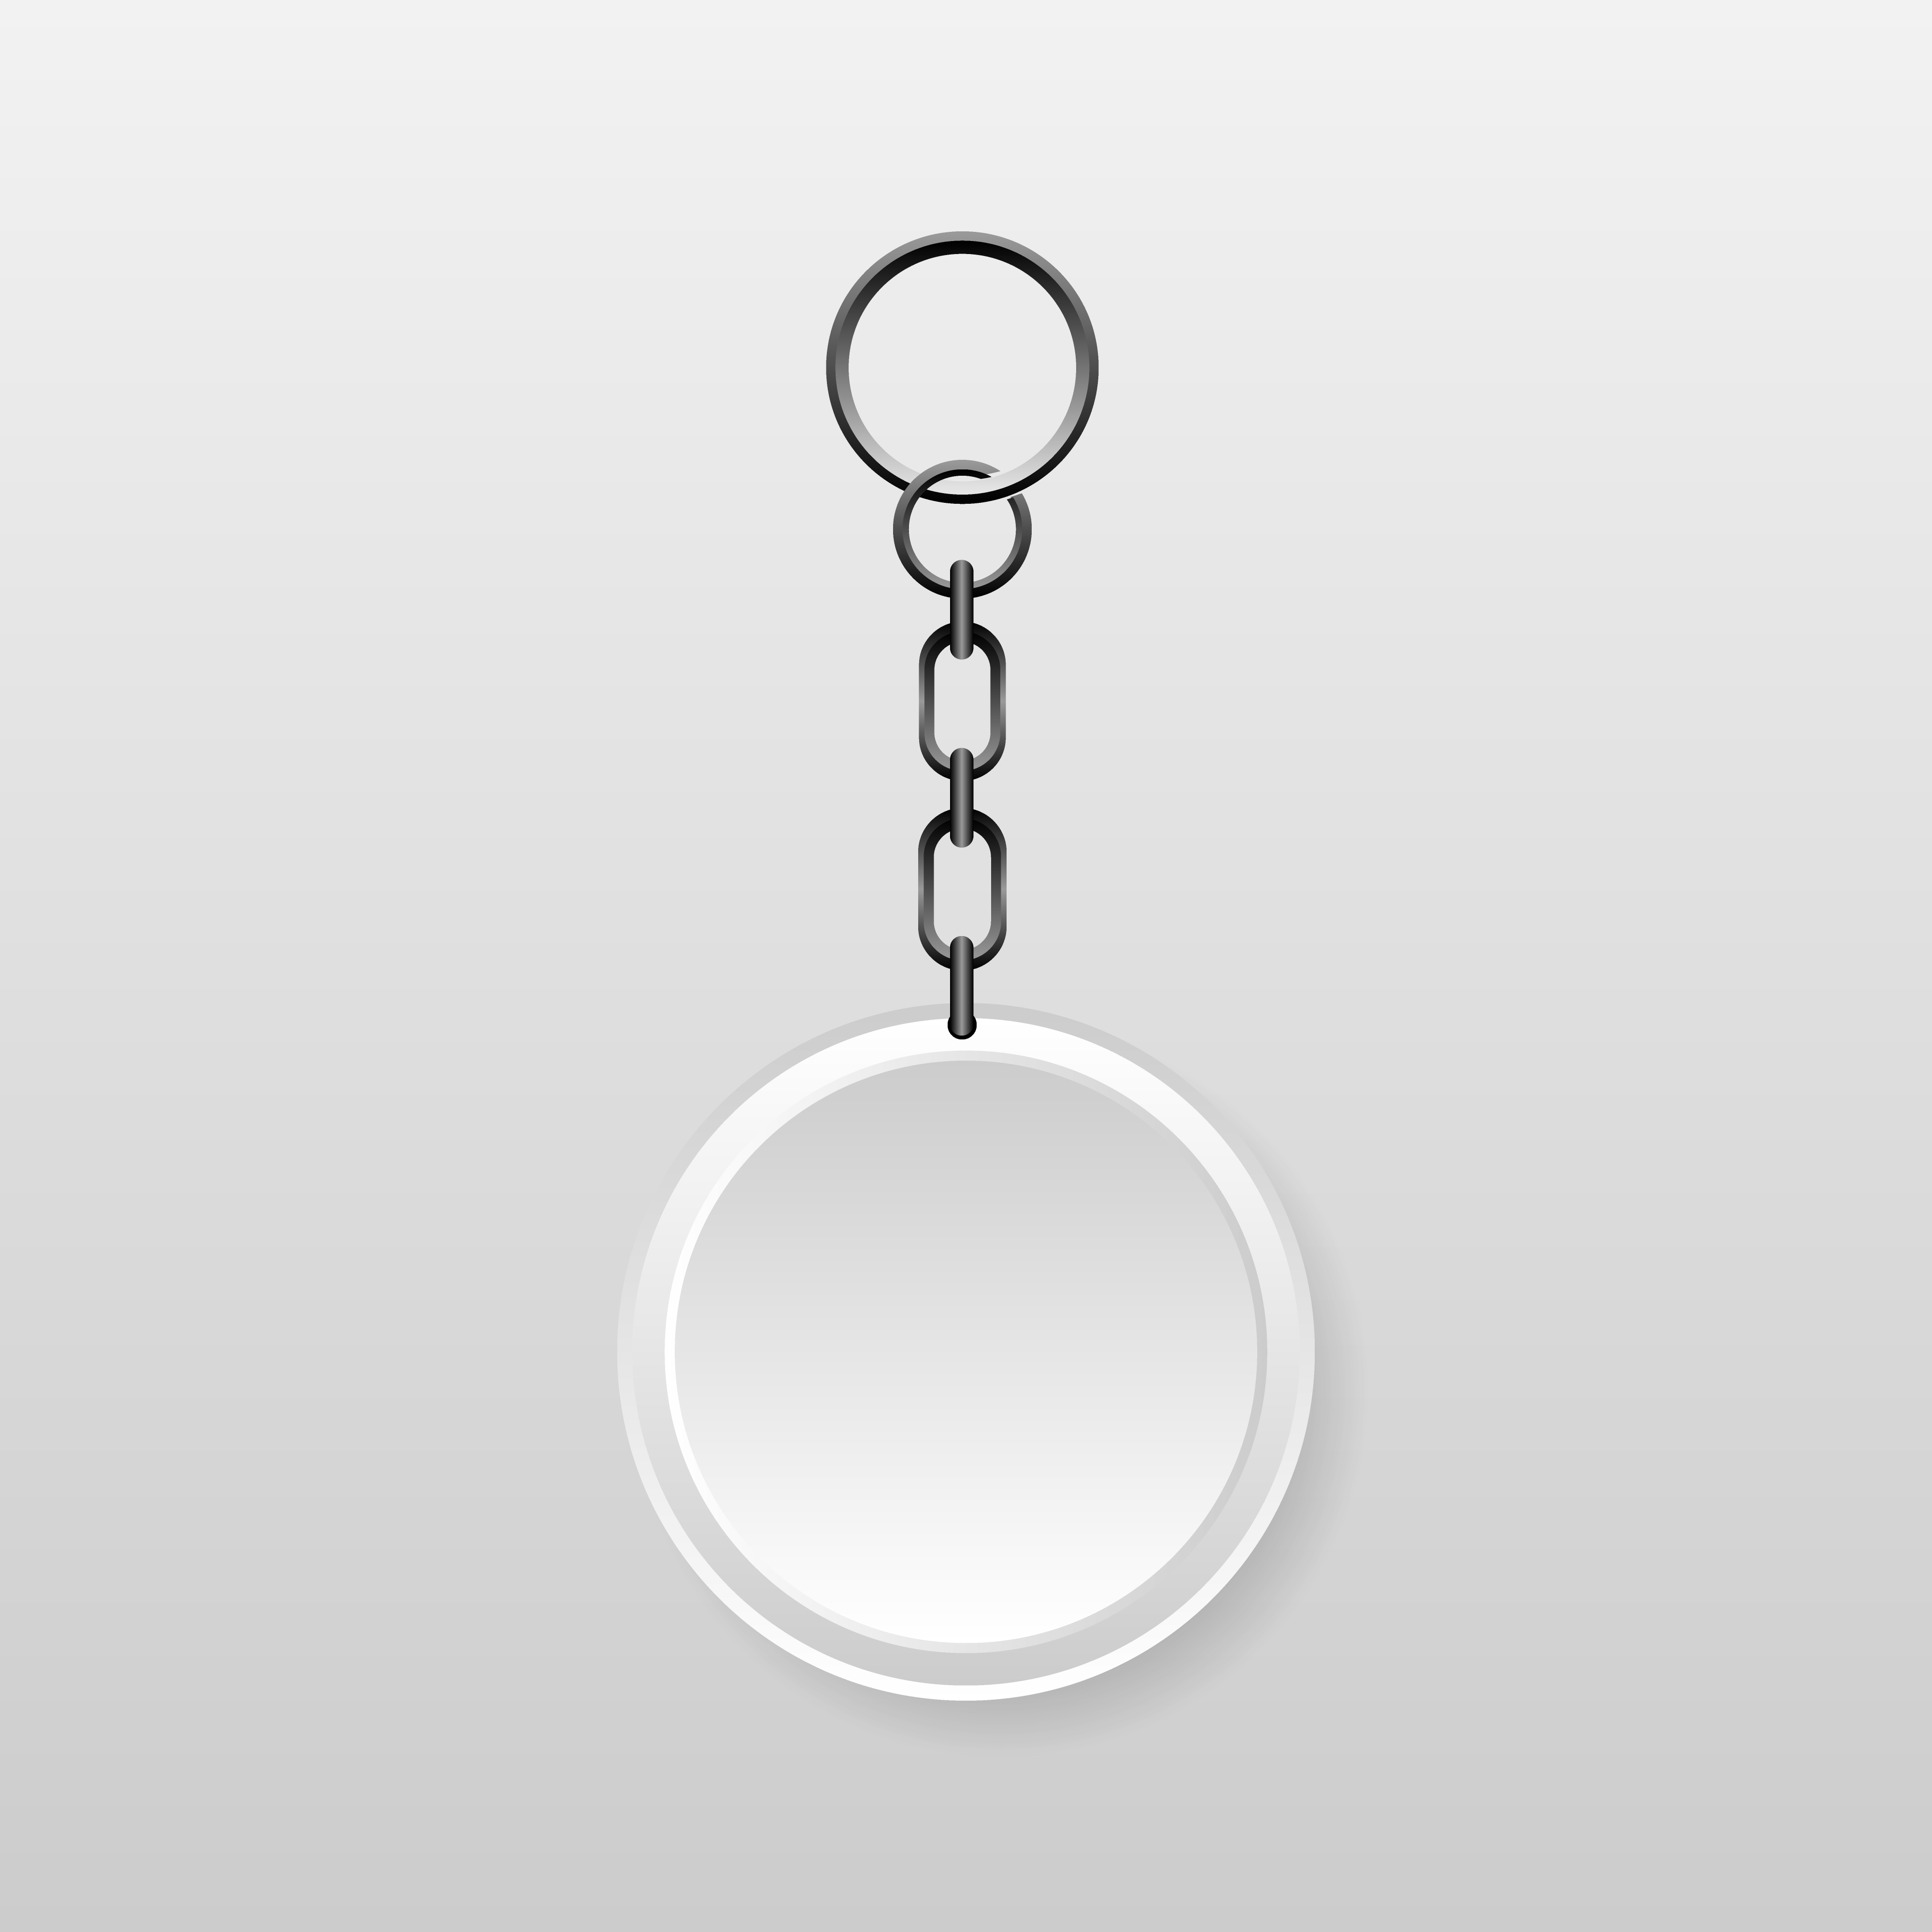 Download Keychain Mockup Free Vector Art - (14 Free Downloads)